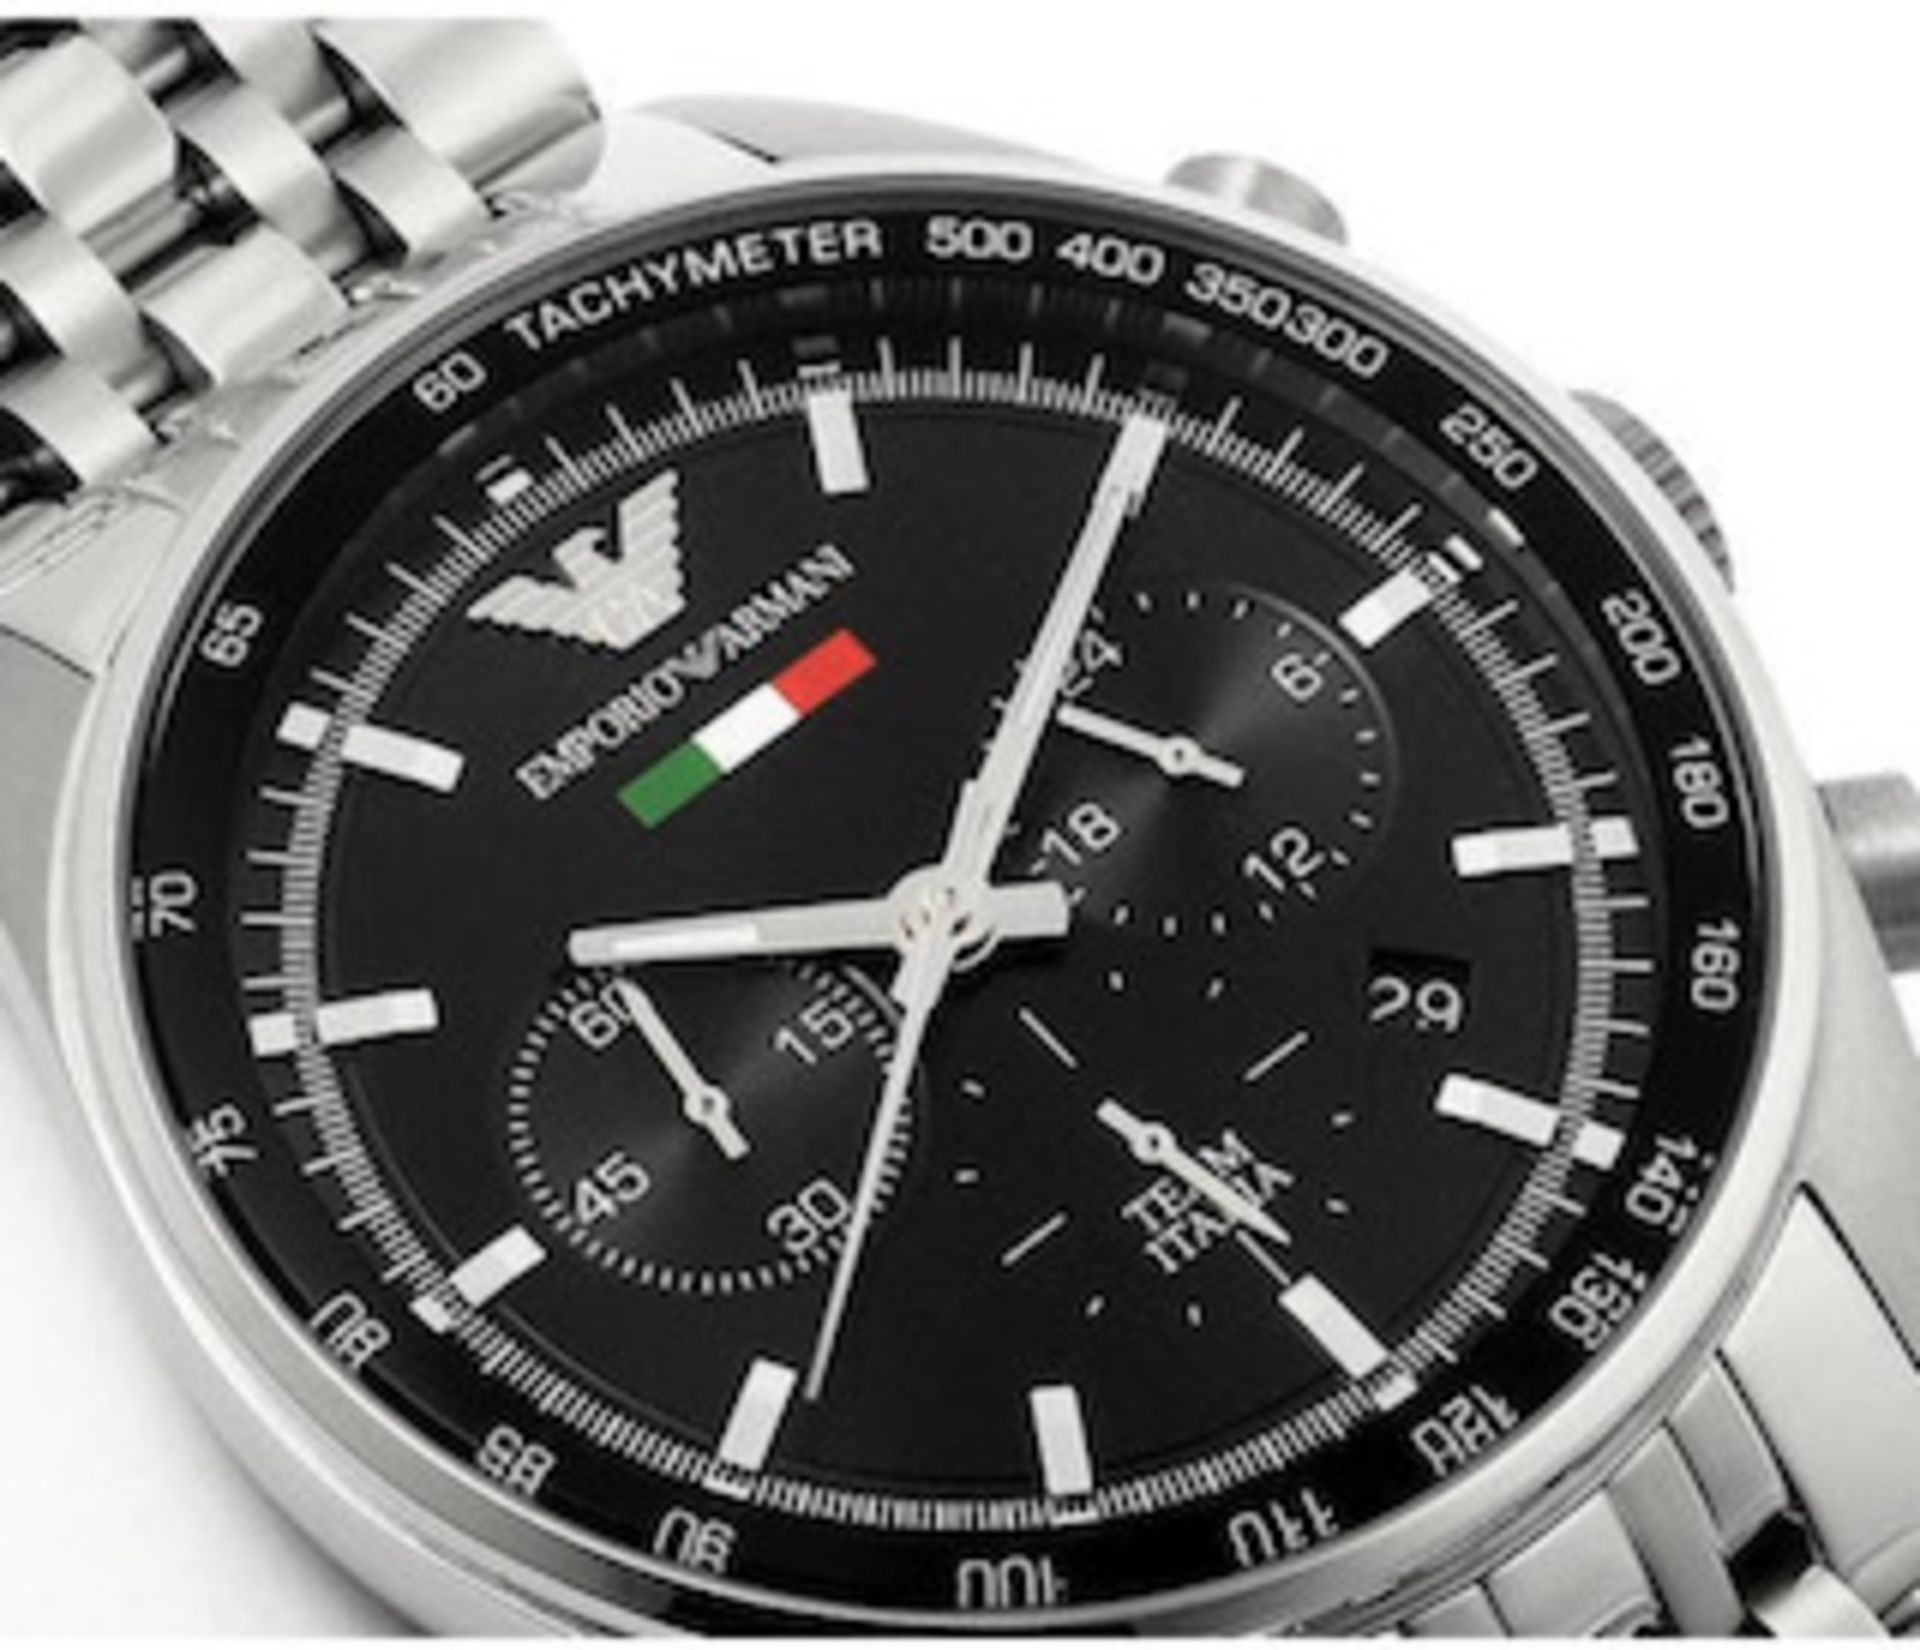 Men's Emporio Armani AR5983 Quartz Black Dial Stainless Steel Chronograph Watch - Image 5 of 9